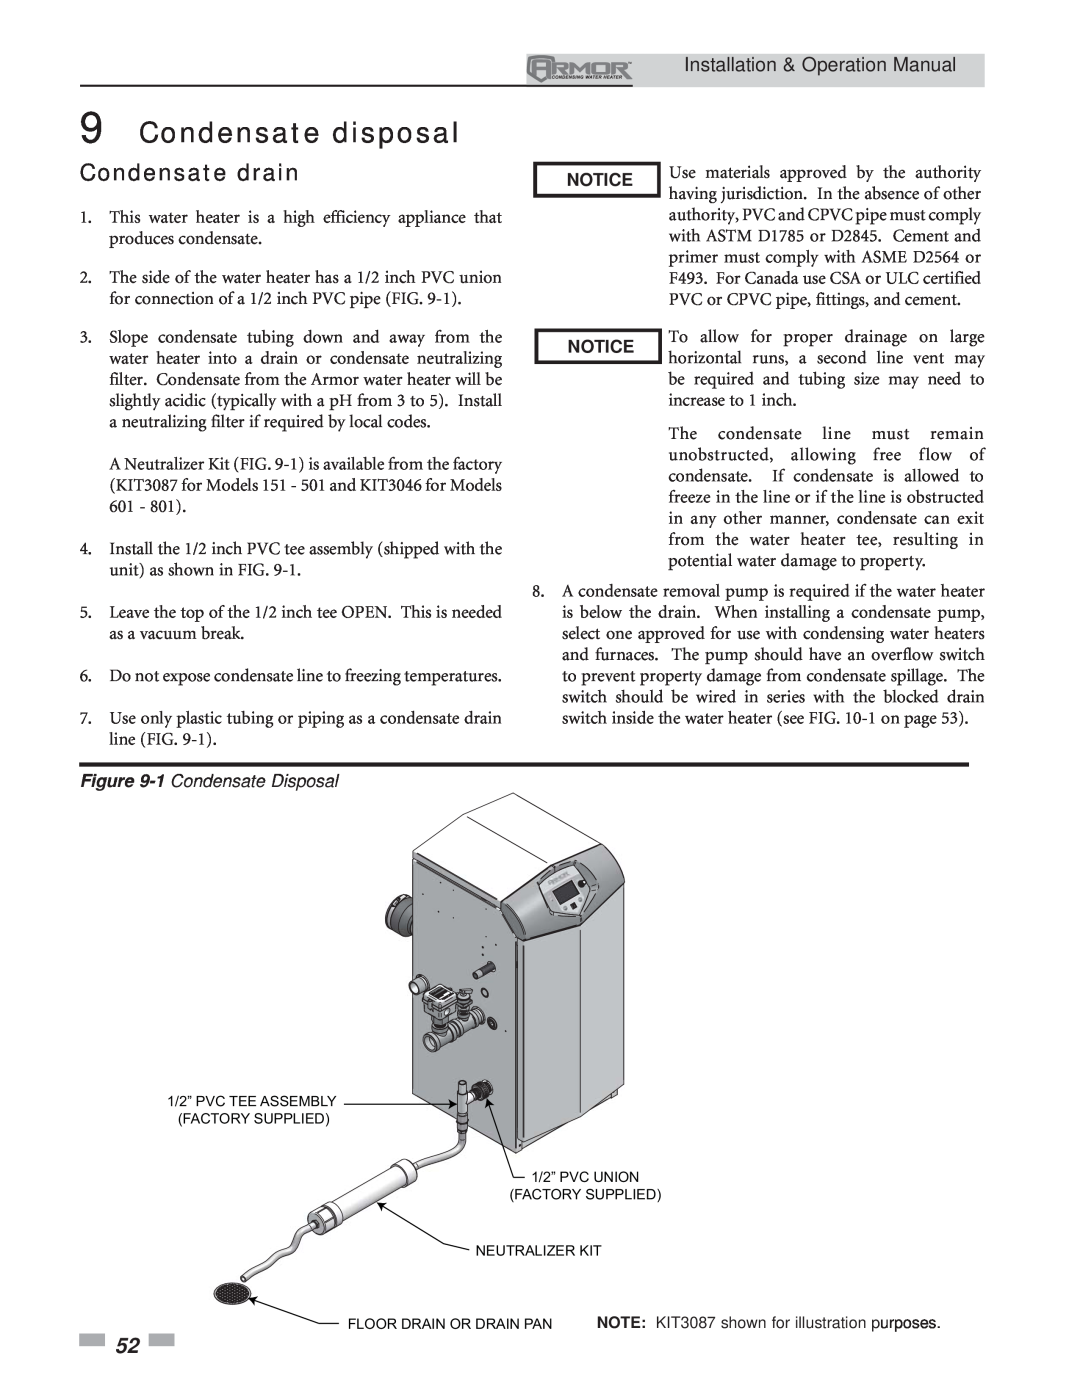 Lochinvar 151 Condensate disposal, Condensate drain, 1 Condensate Disposal, Installation & Operation Manual, Notice 